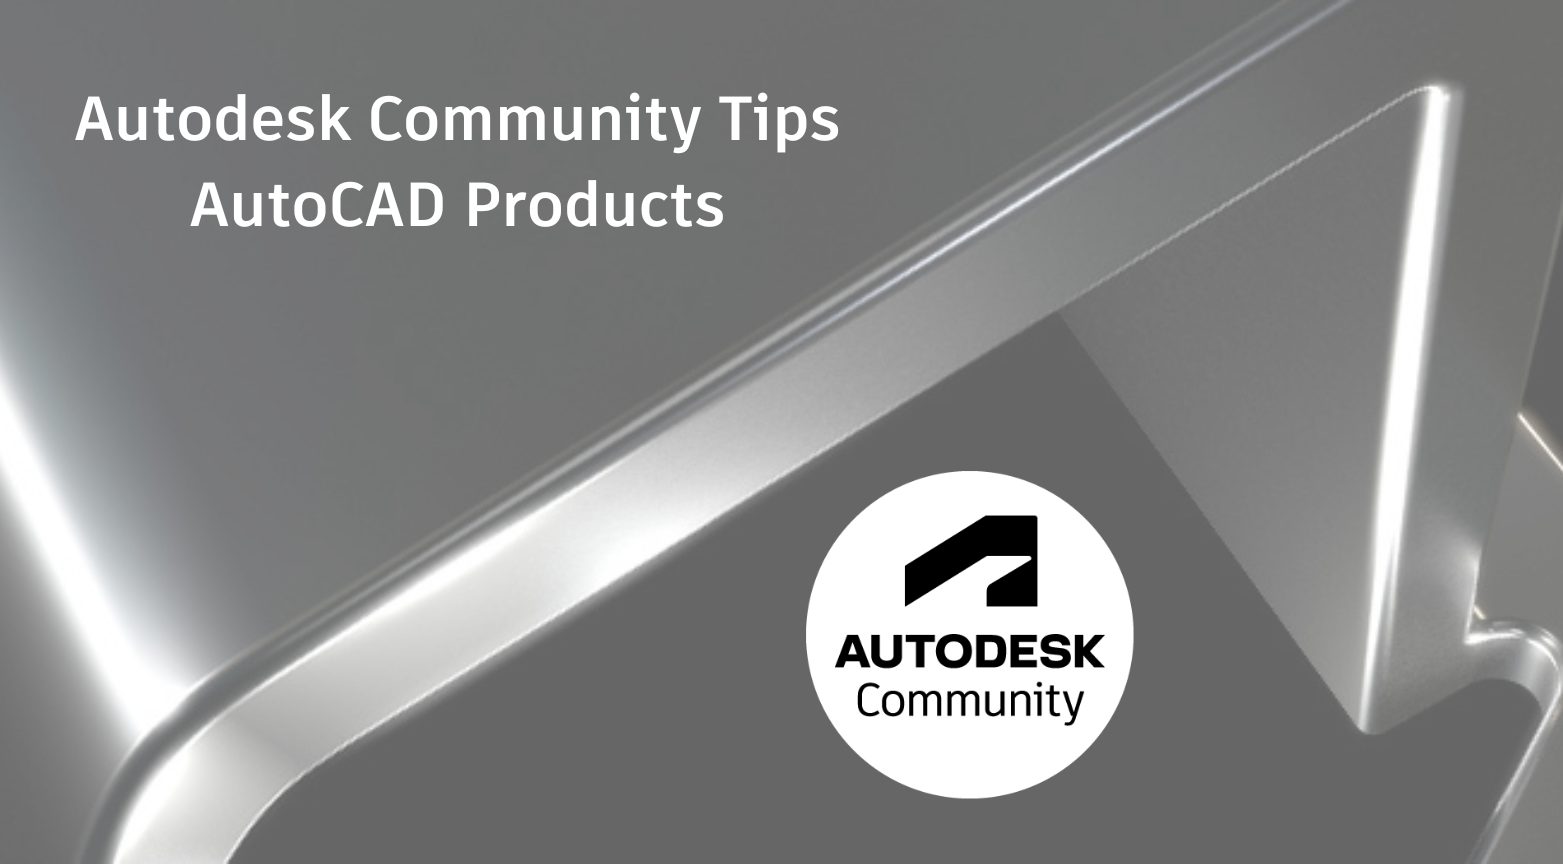 Autodesk Community Tips